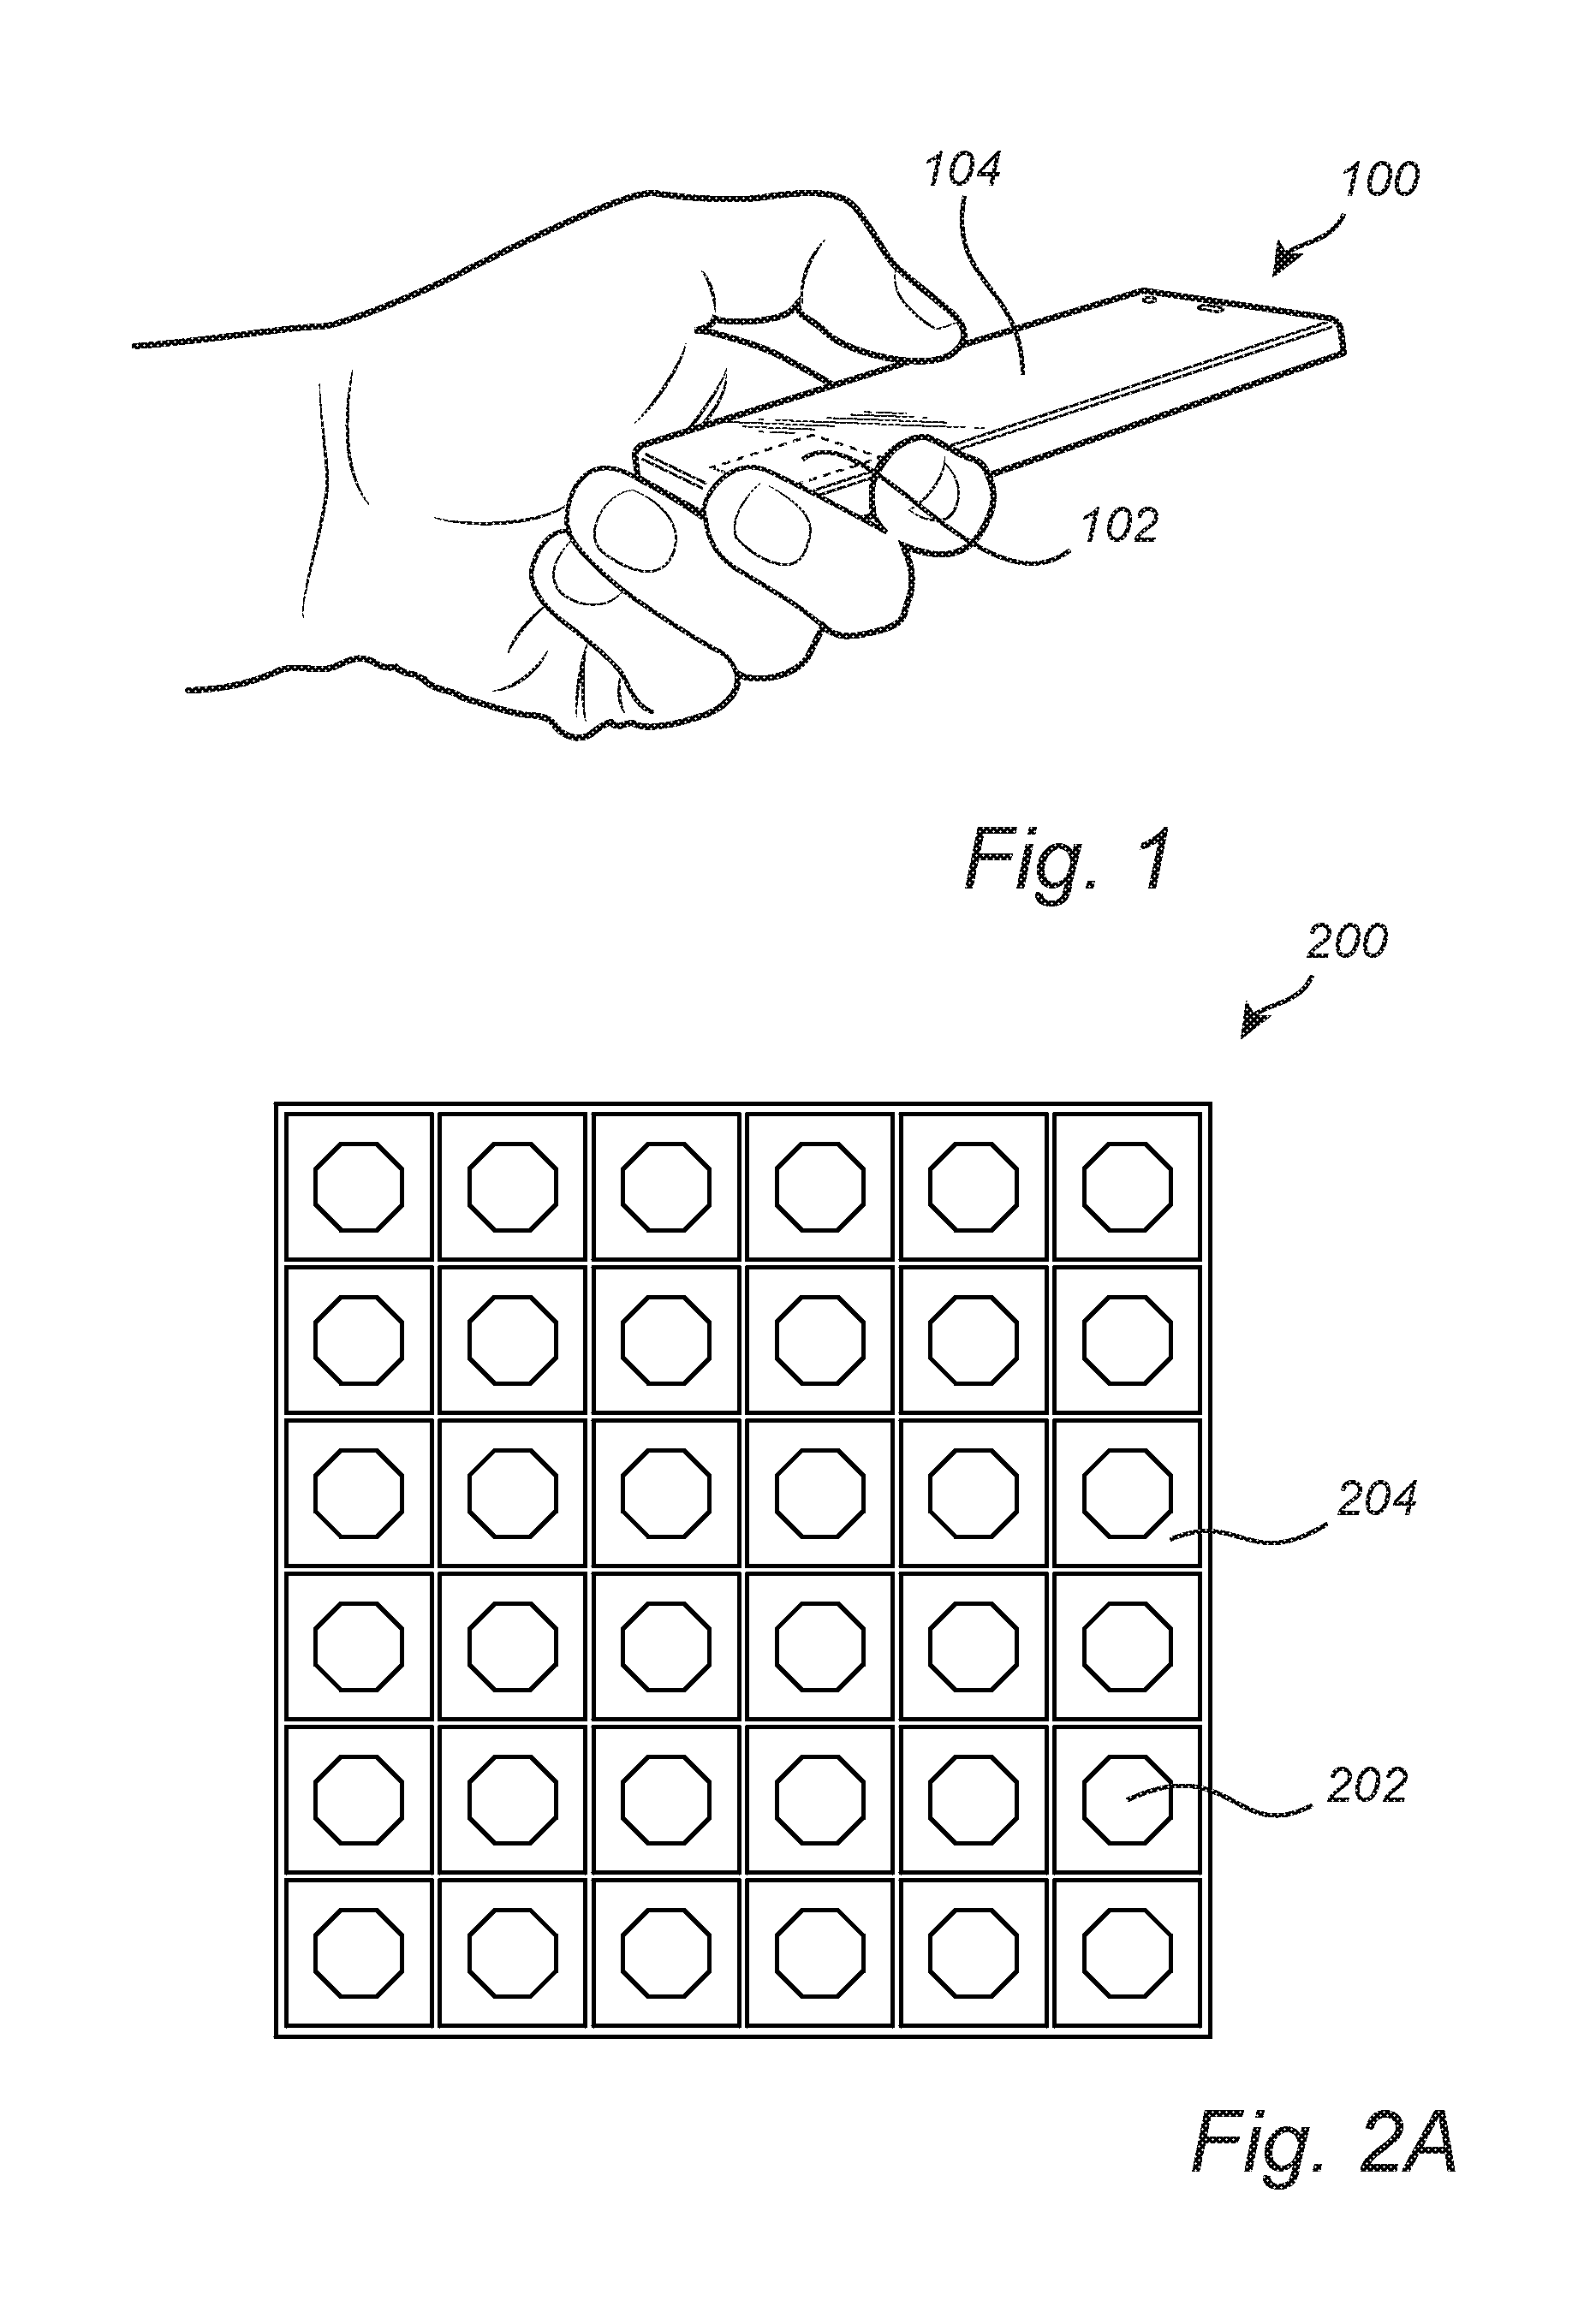 Fingerprint sensing device with interposer structure